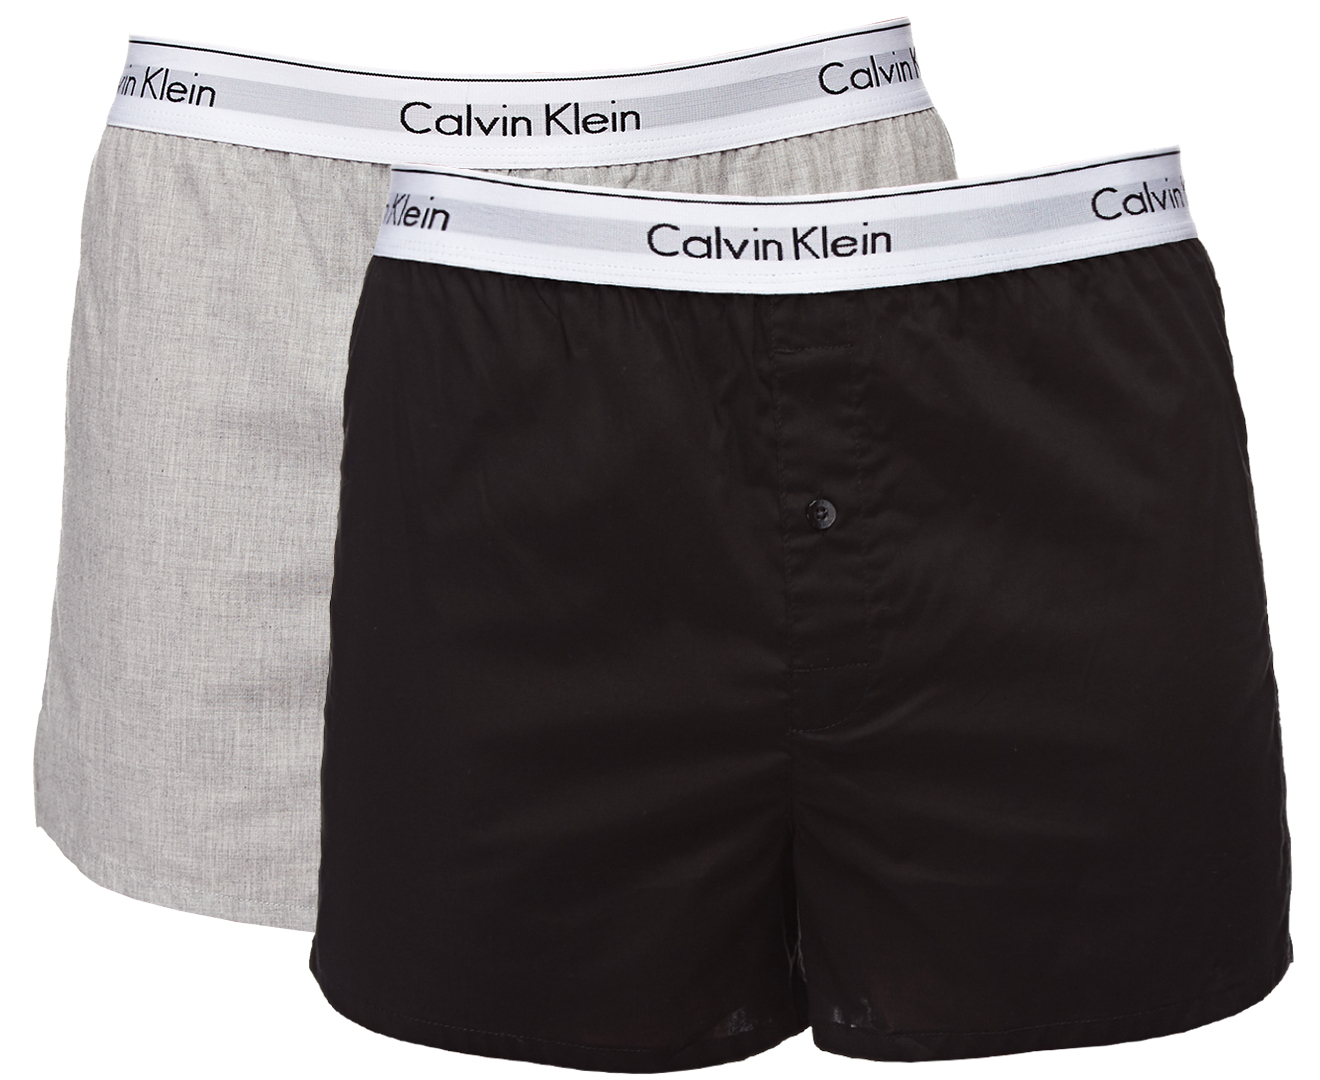 Calvin Klein Men's Modern Cotton Stretch Slim Fit Boxers 2-Pack - Black ...